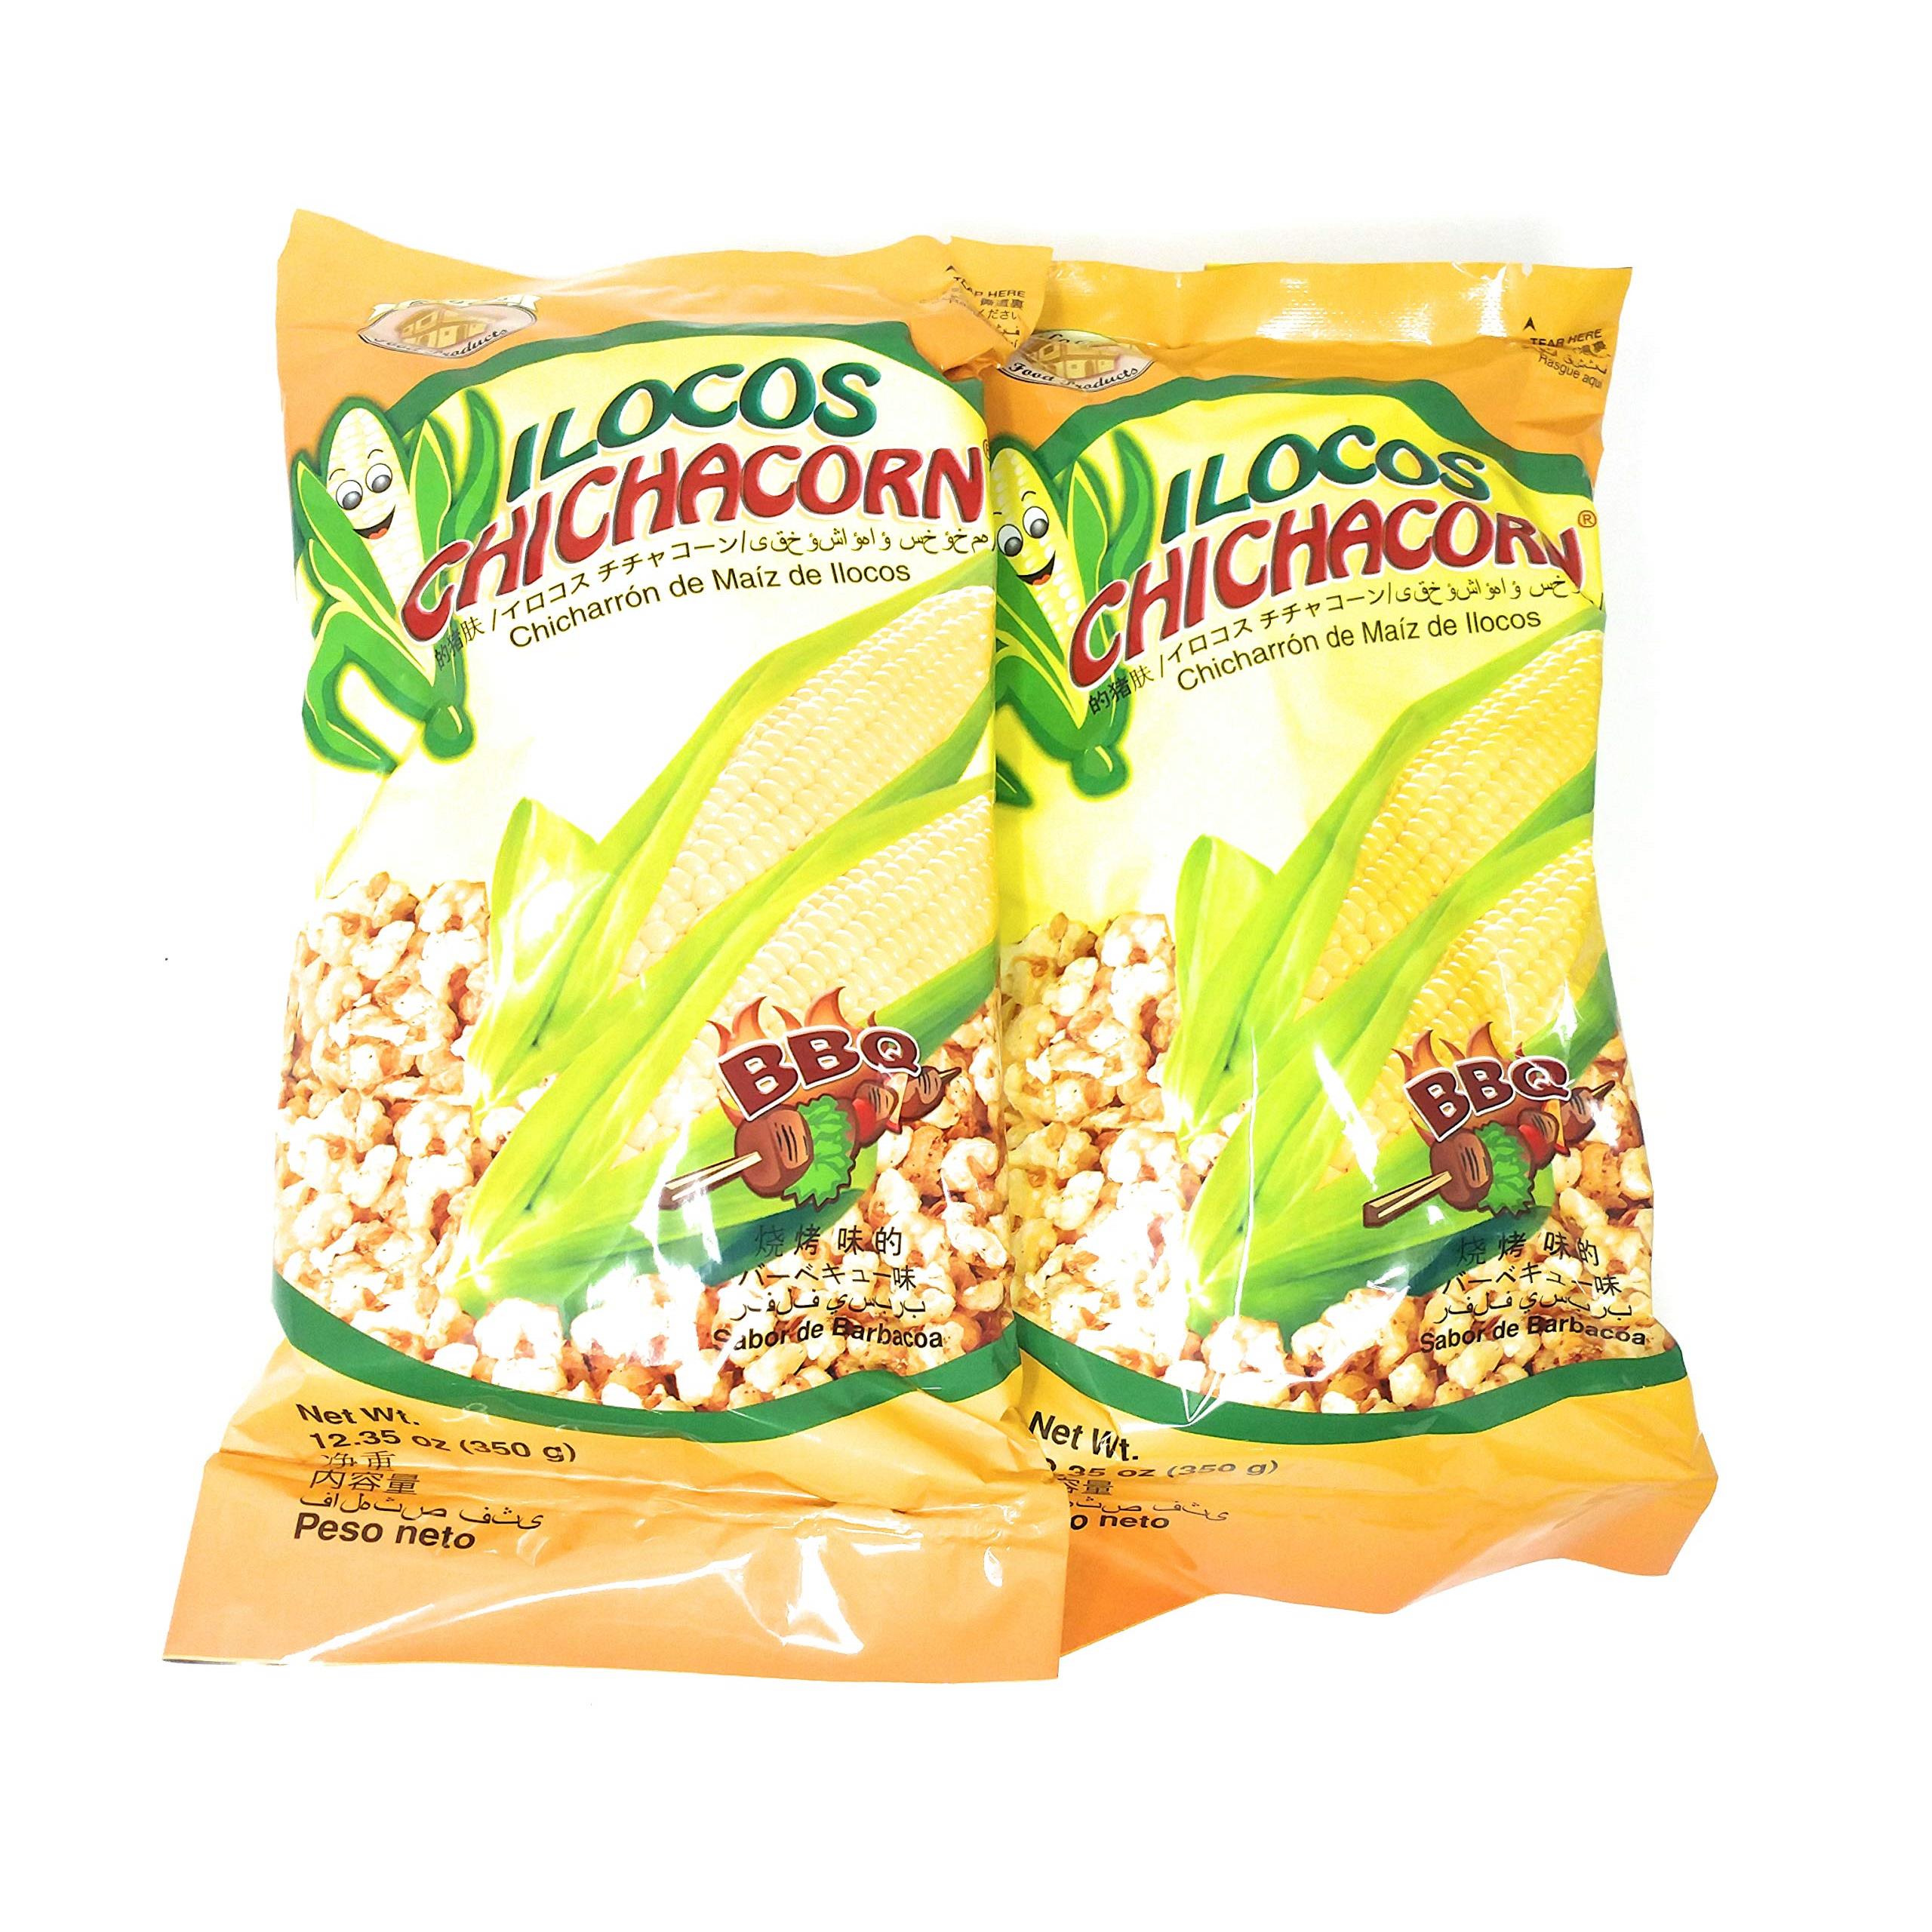 Ilocos Chichacorn Cornick Corn Nuts - BBQ Flavor, 12.35 oz (350g), 2 Pack